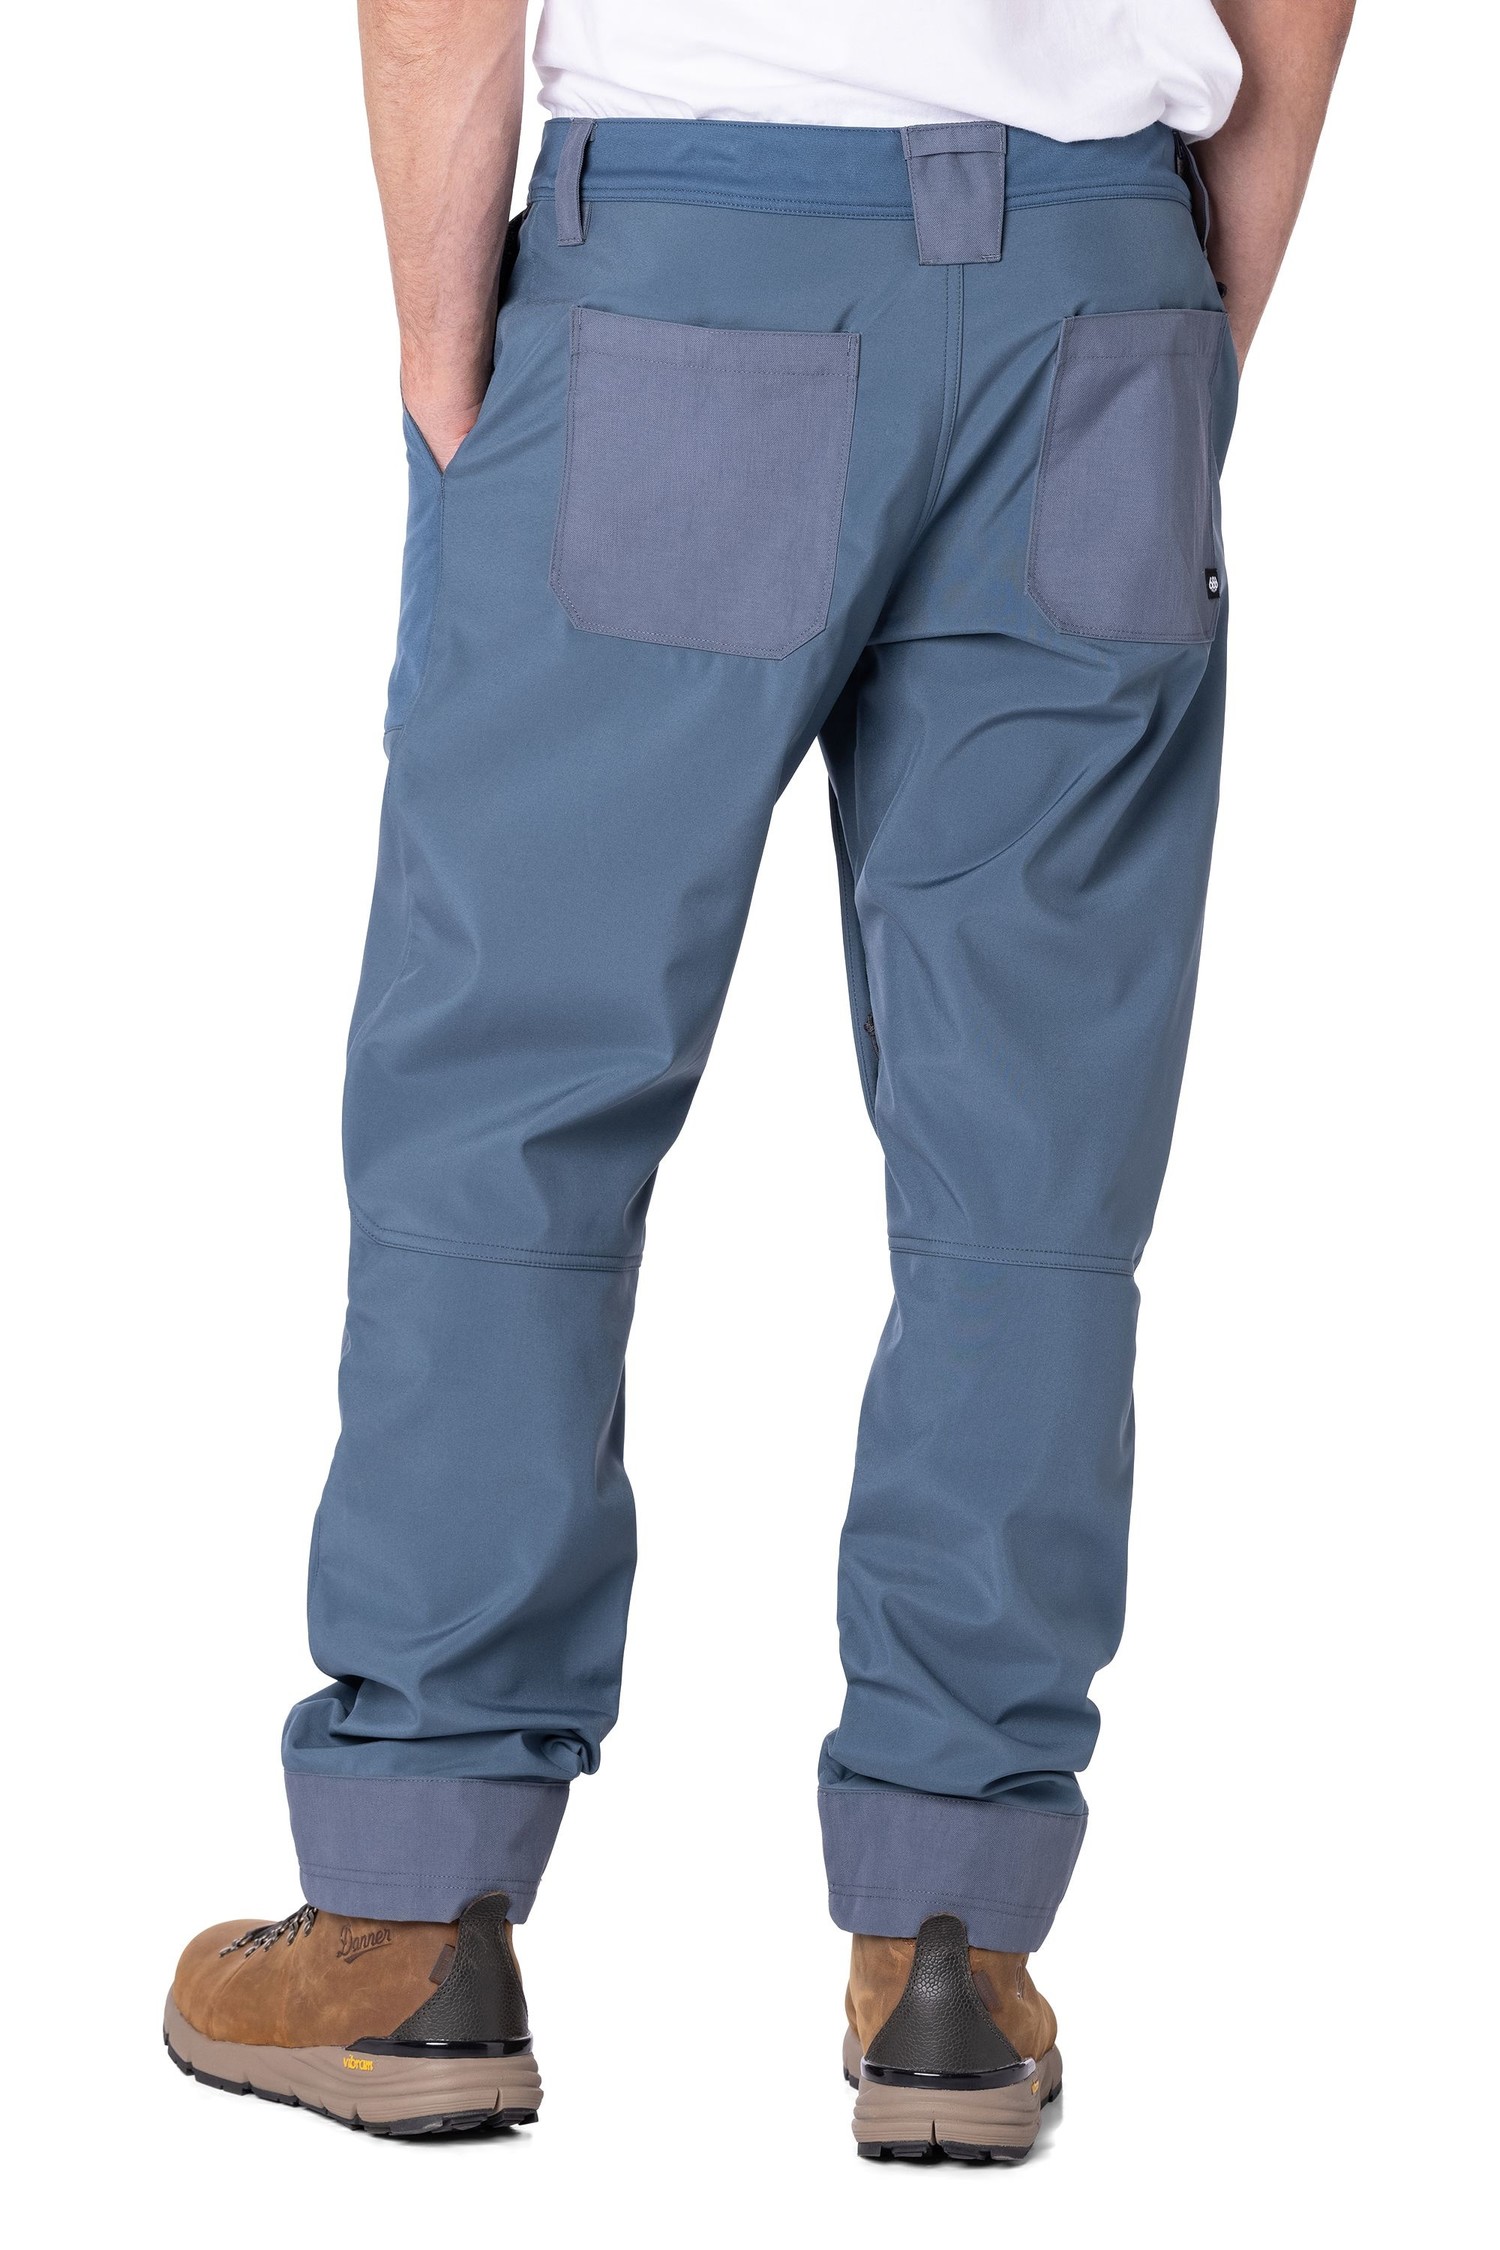 Iso Halcyon Blue Size 8 Pants : r/REI